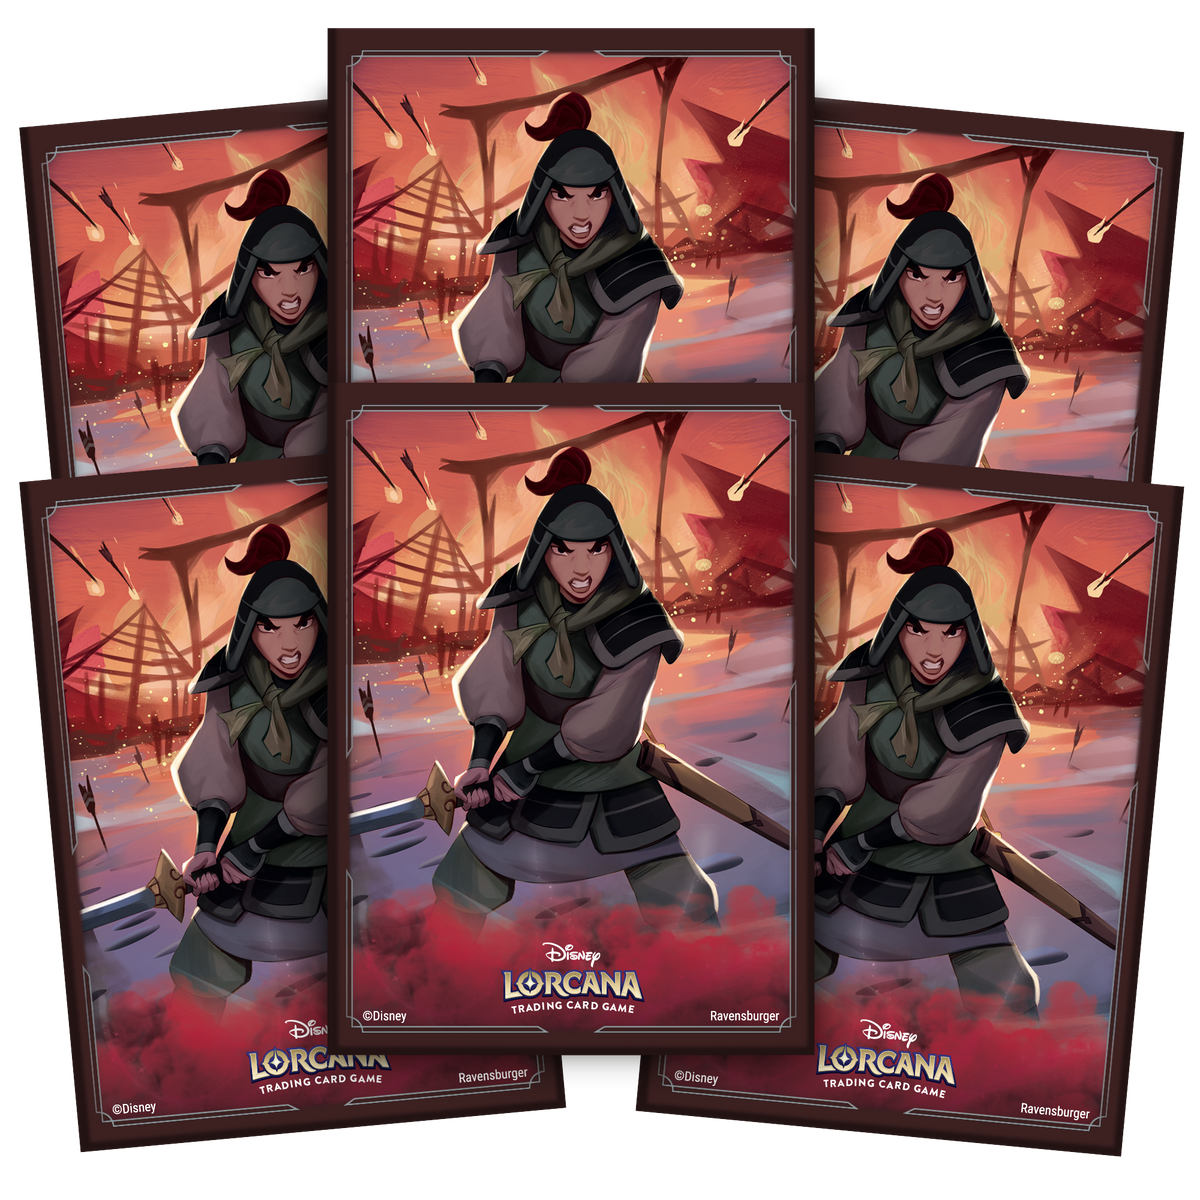 Disney Lorcana TCG: Card Sleeves - Mulan